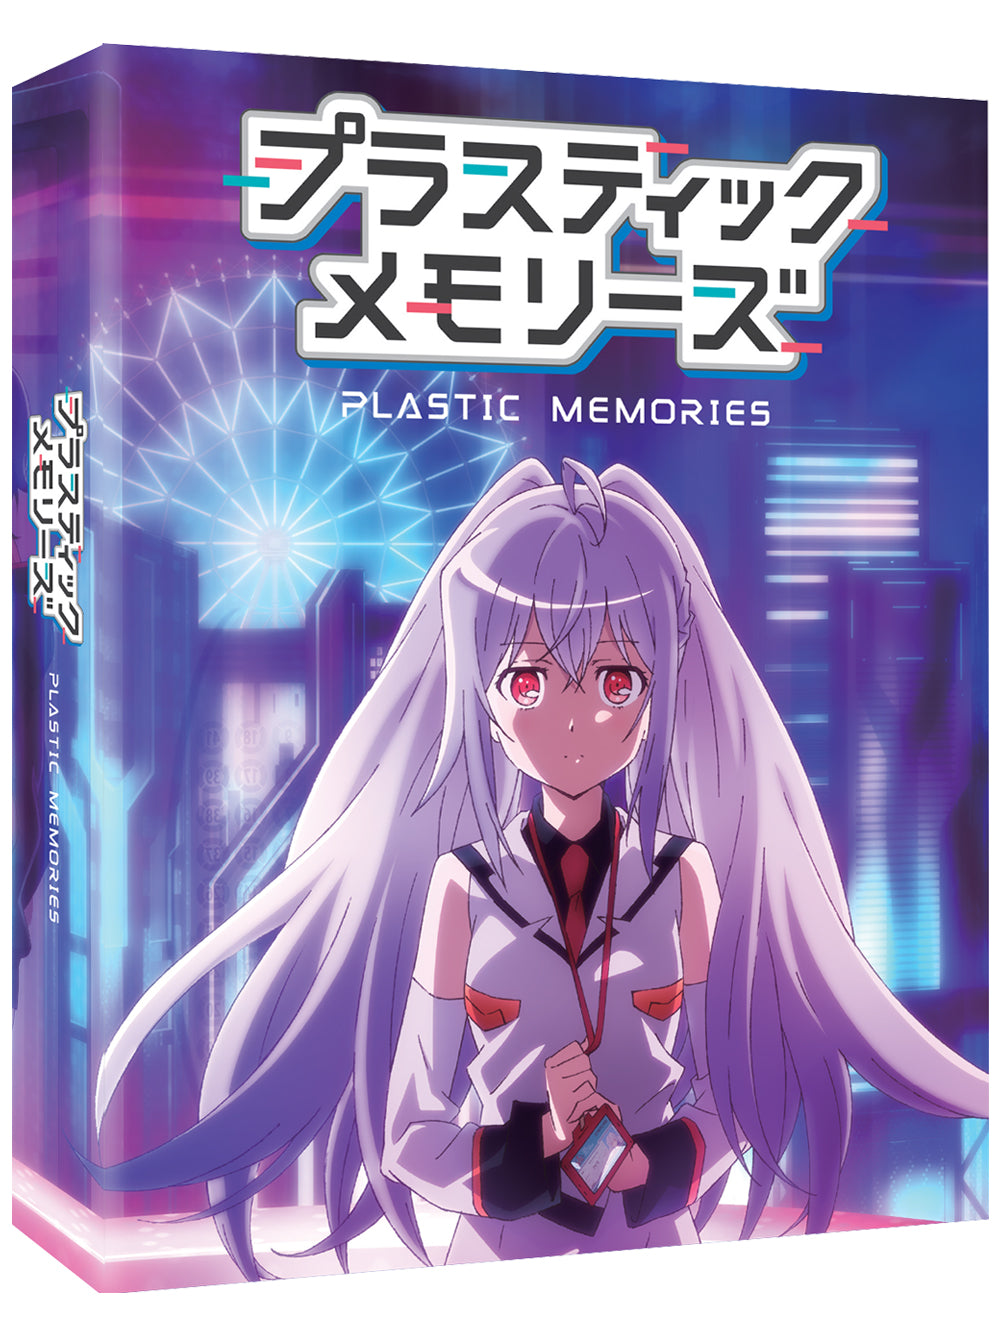 Plastic Memories Anime Manga Poster